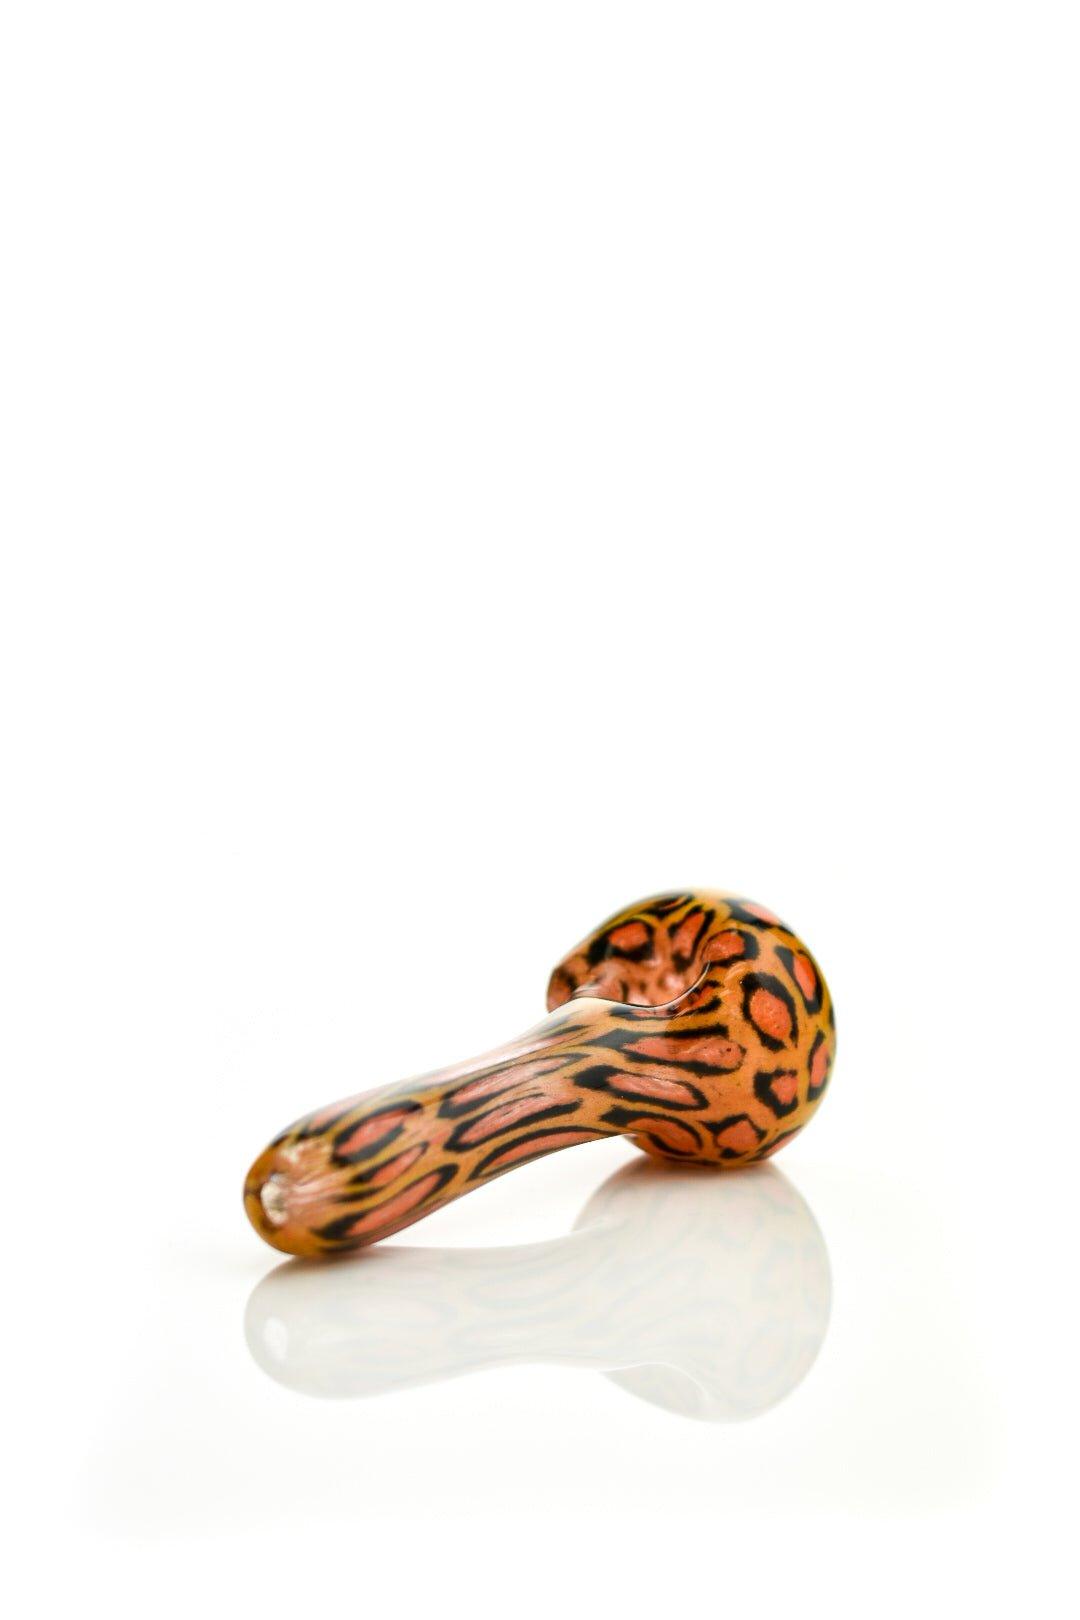 Hoffman glass leopard - Smoke Spot Smoke Shop